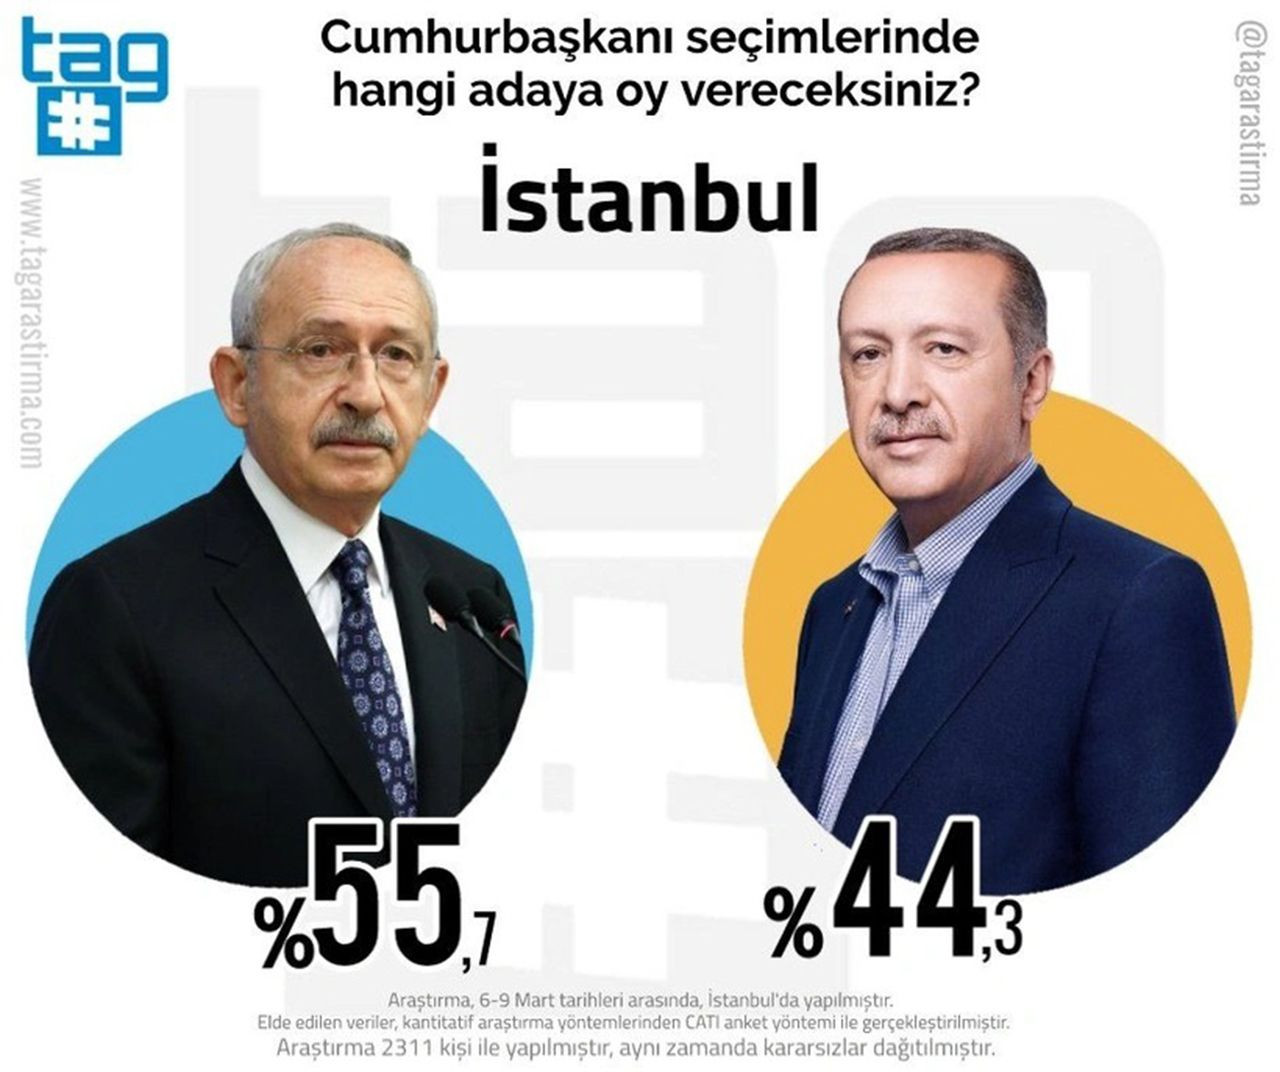 İl il Cumhurbaşkanlığı seçimi anketi sonuçları açıklandı - Resim: 7